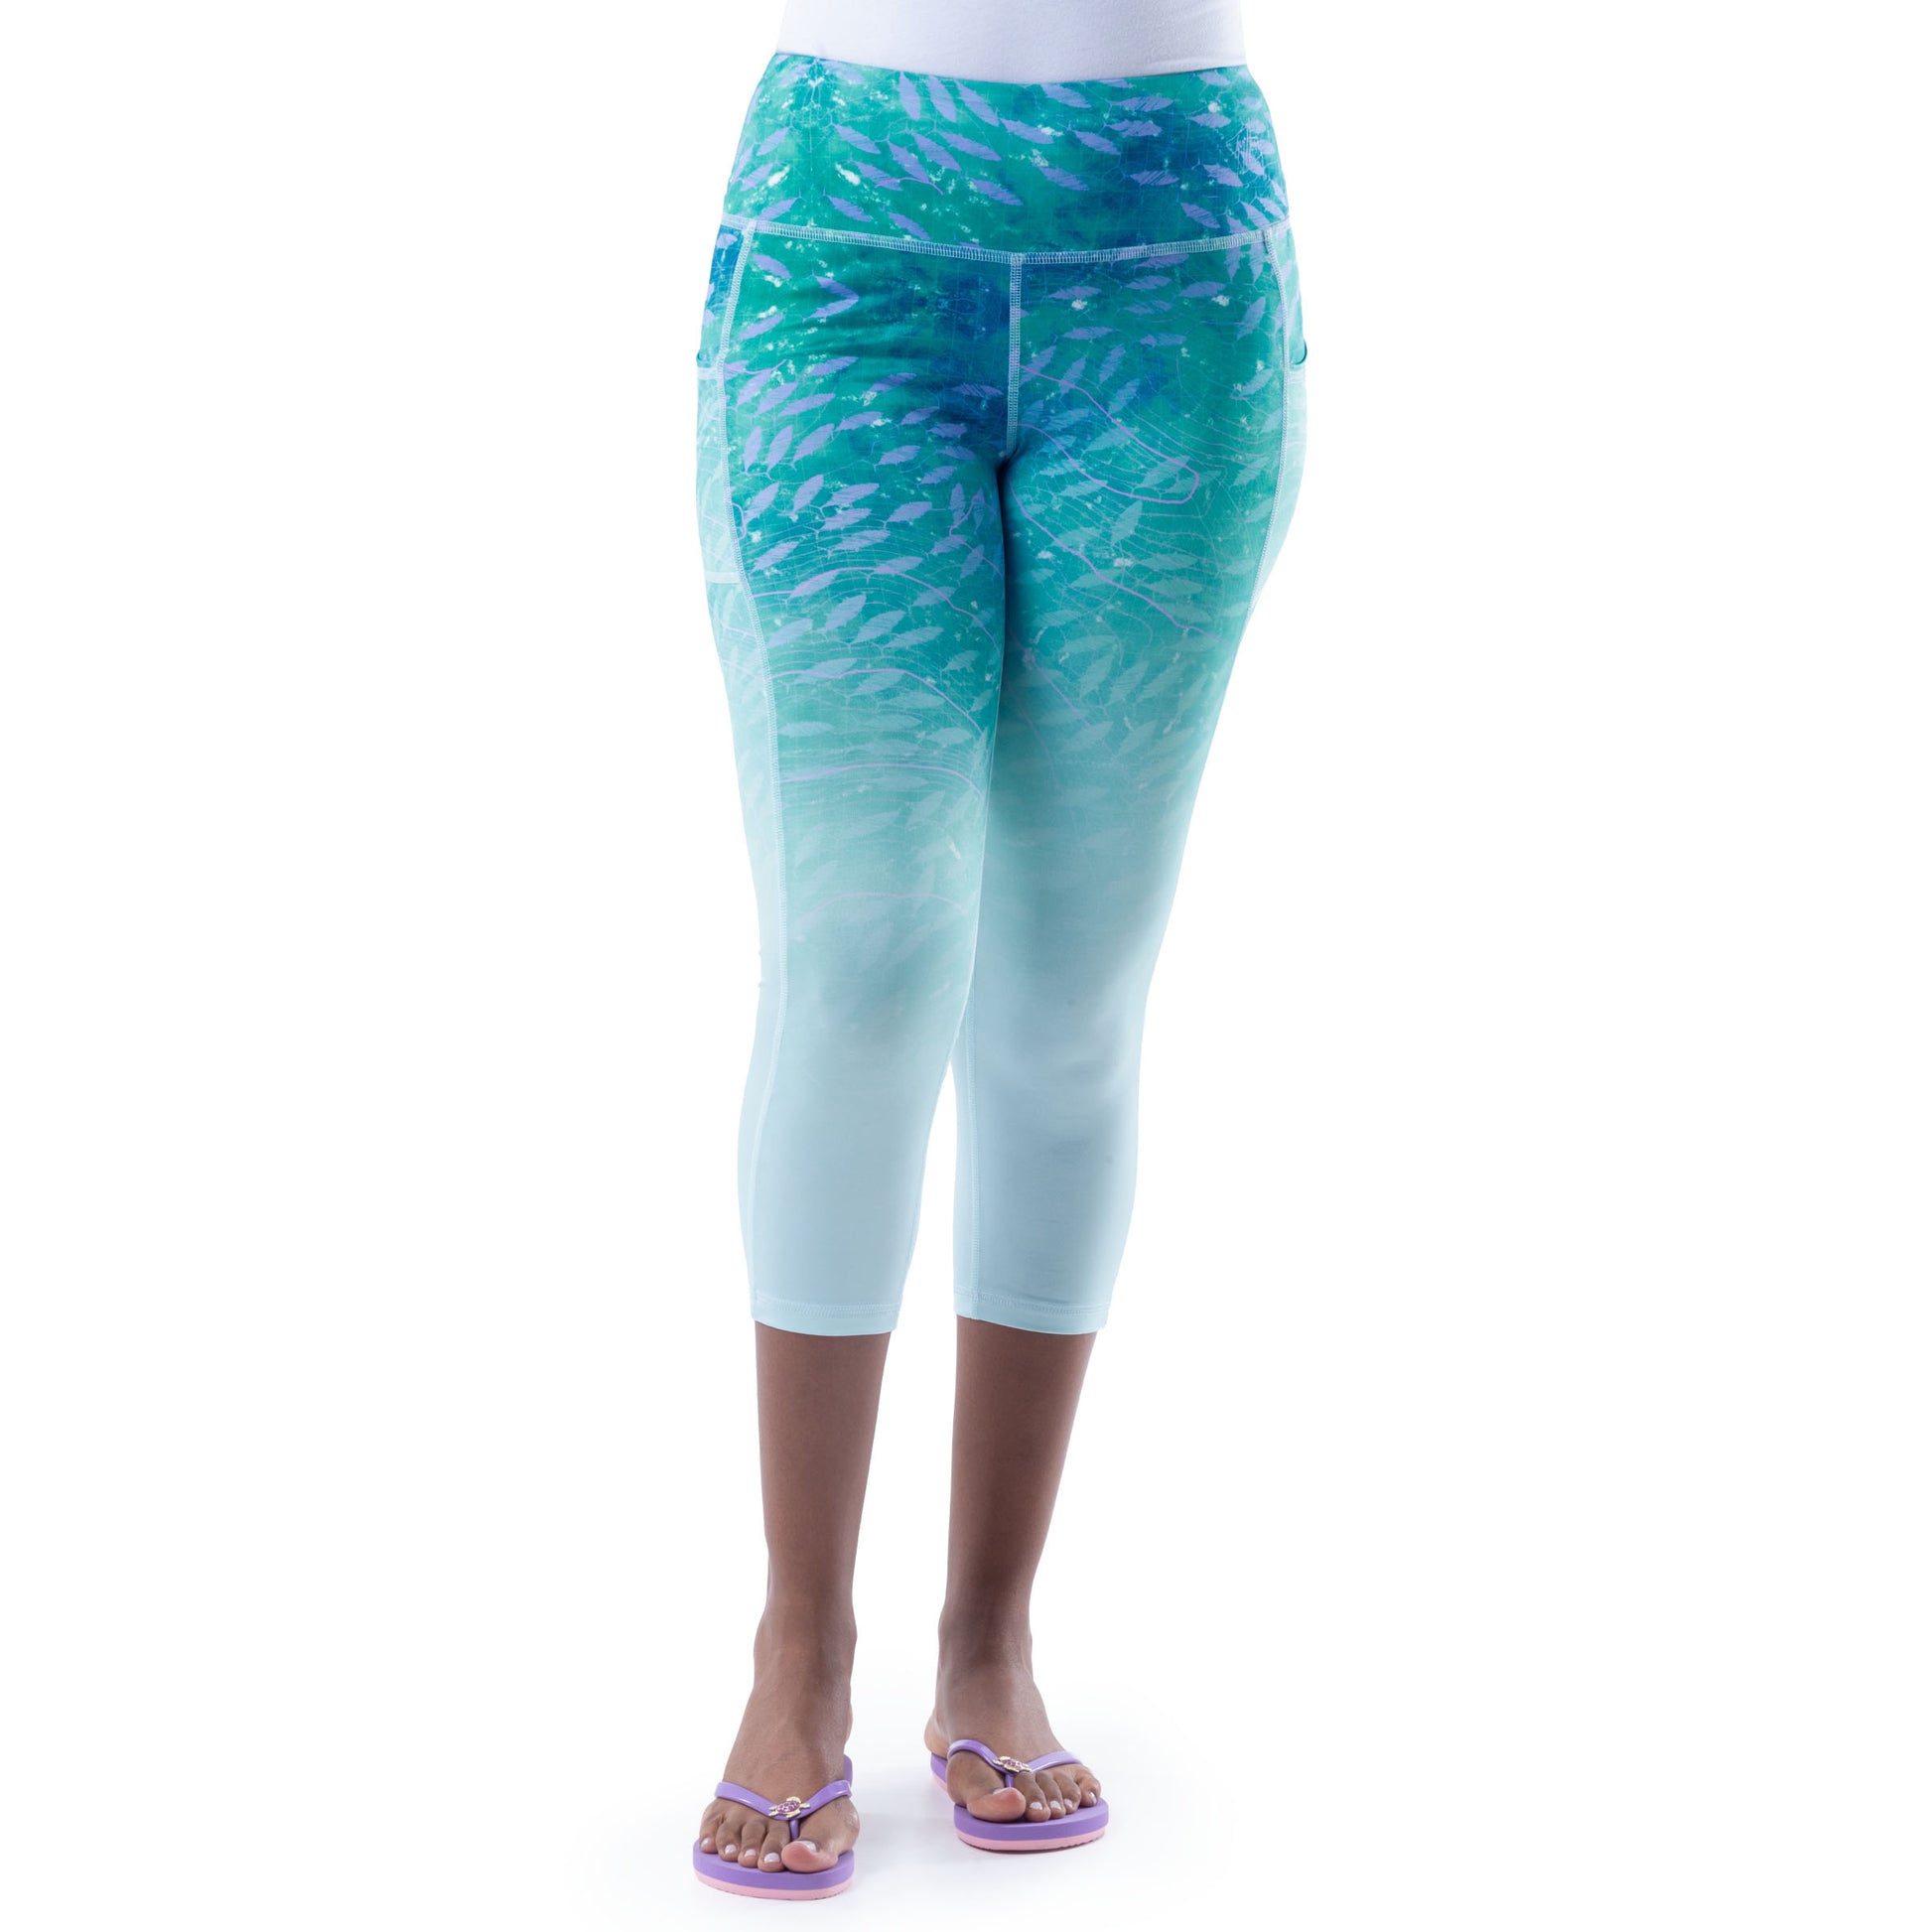 Pgeraug pants for women High Waist Solid Color Tight Fitness Hidden Yoga  Pants yoga pants Navy L 